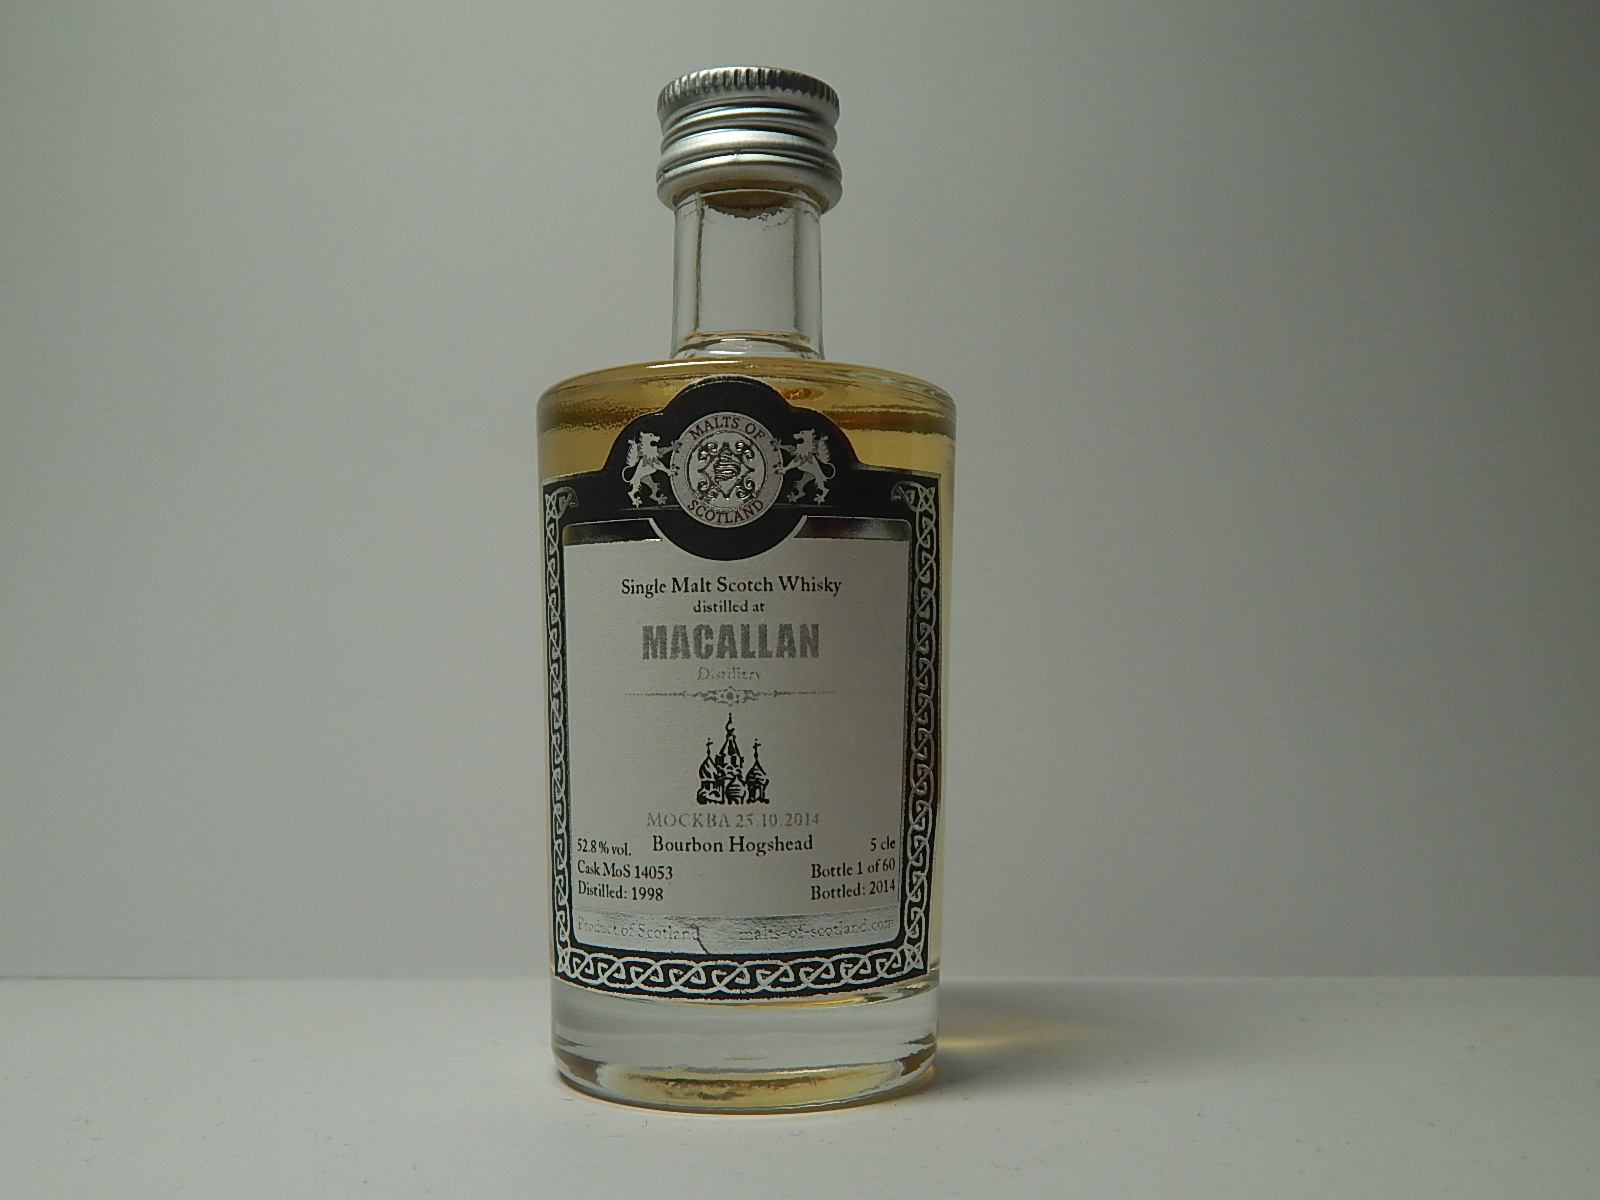 MOSKVA 2014 SMSW Bourbon Hogshead 16yo 1998-2014 "Malts of Scotland" 5cle 52,8%vol